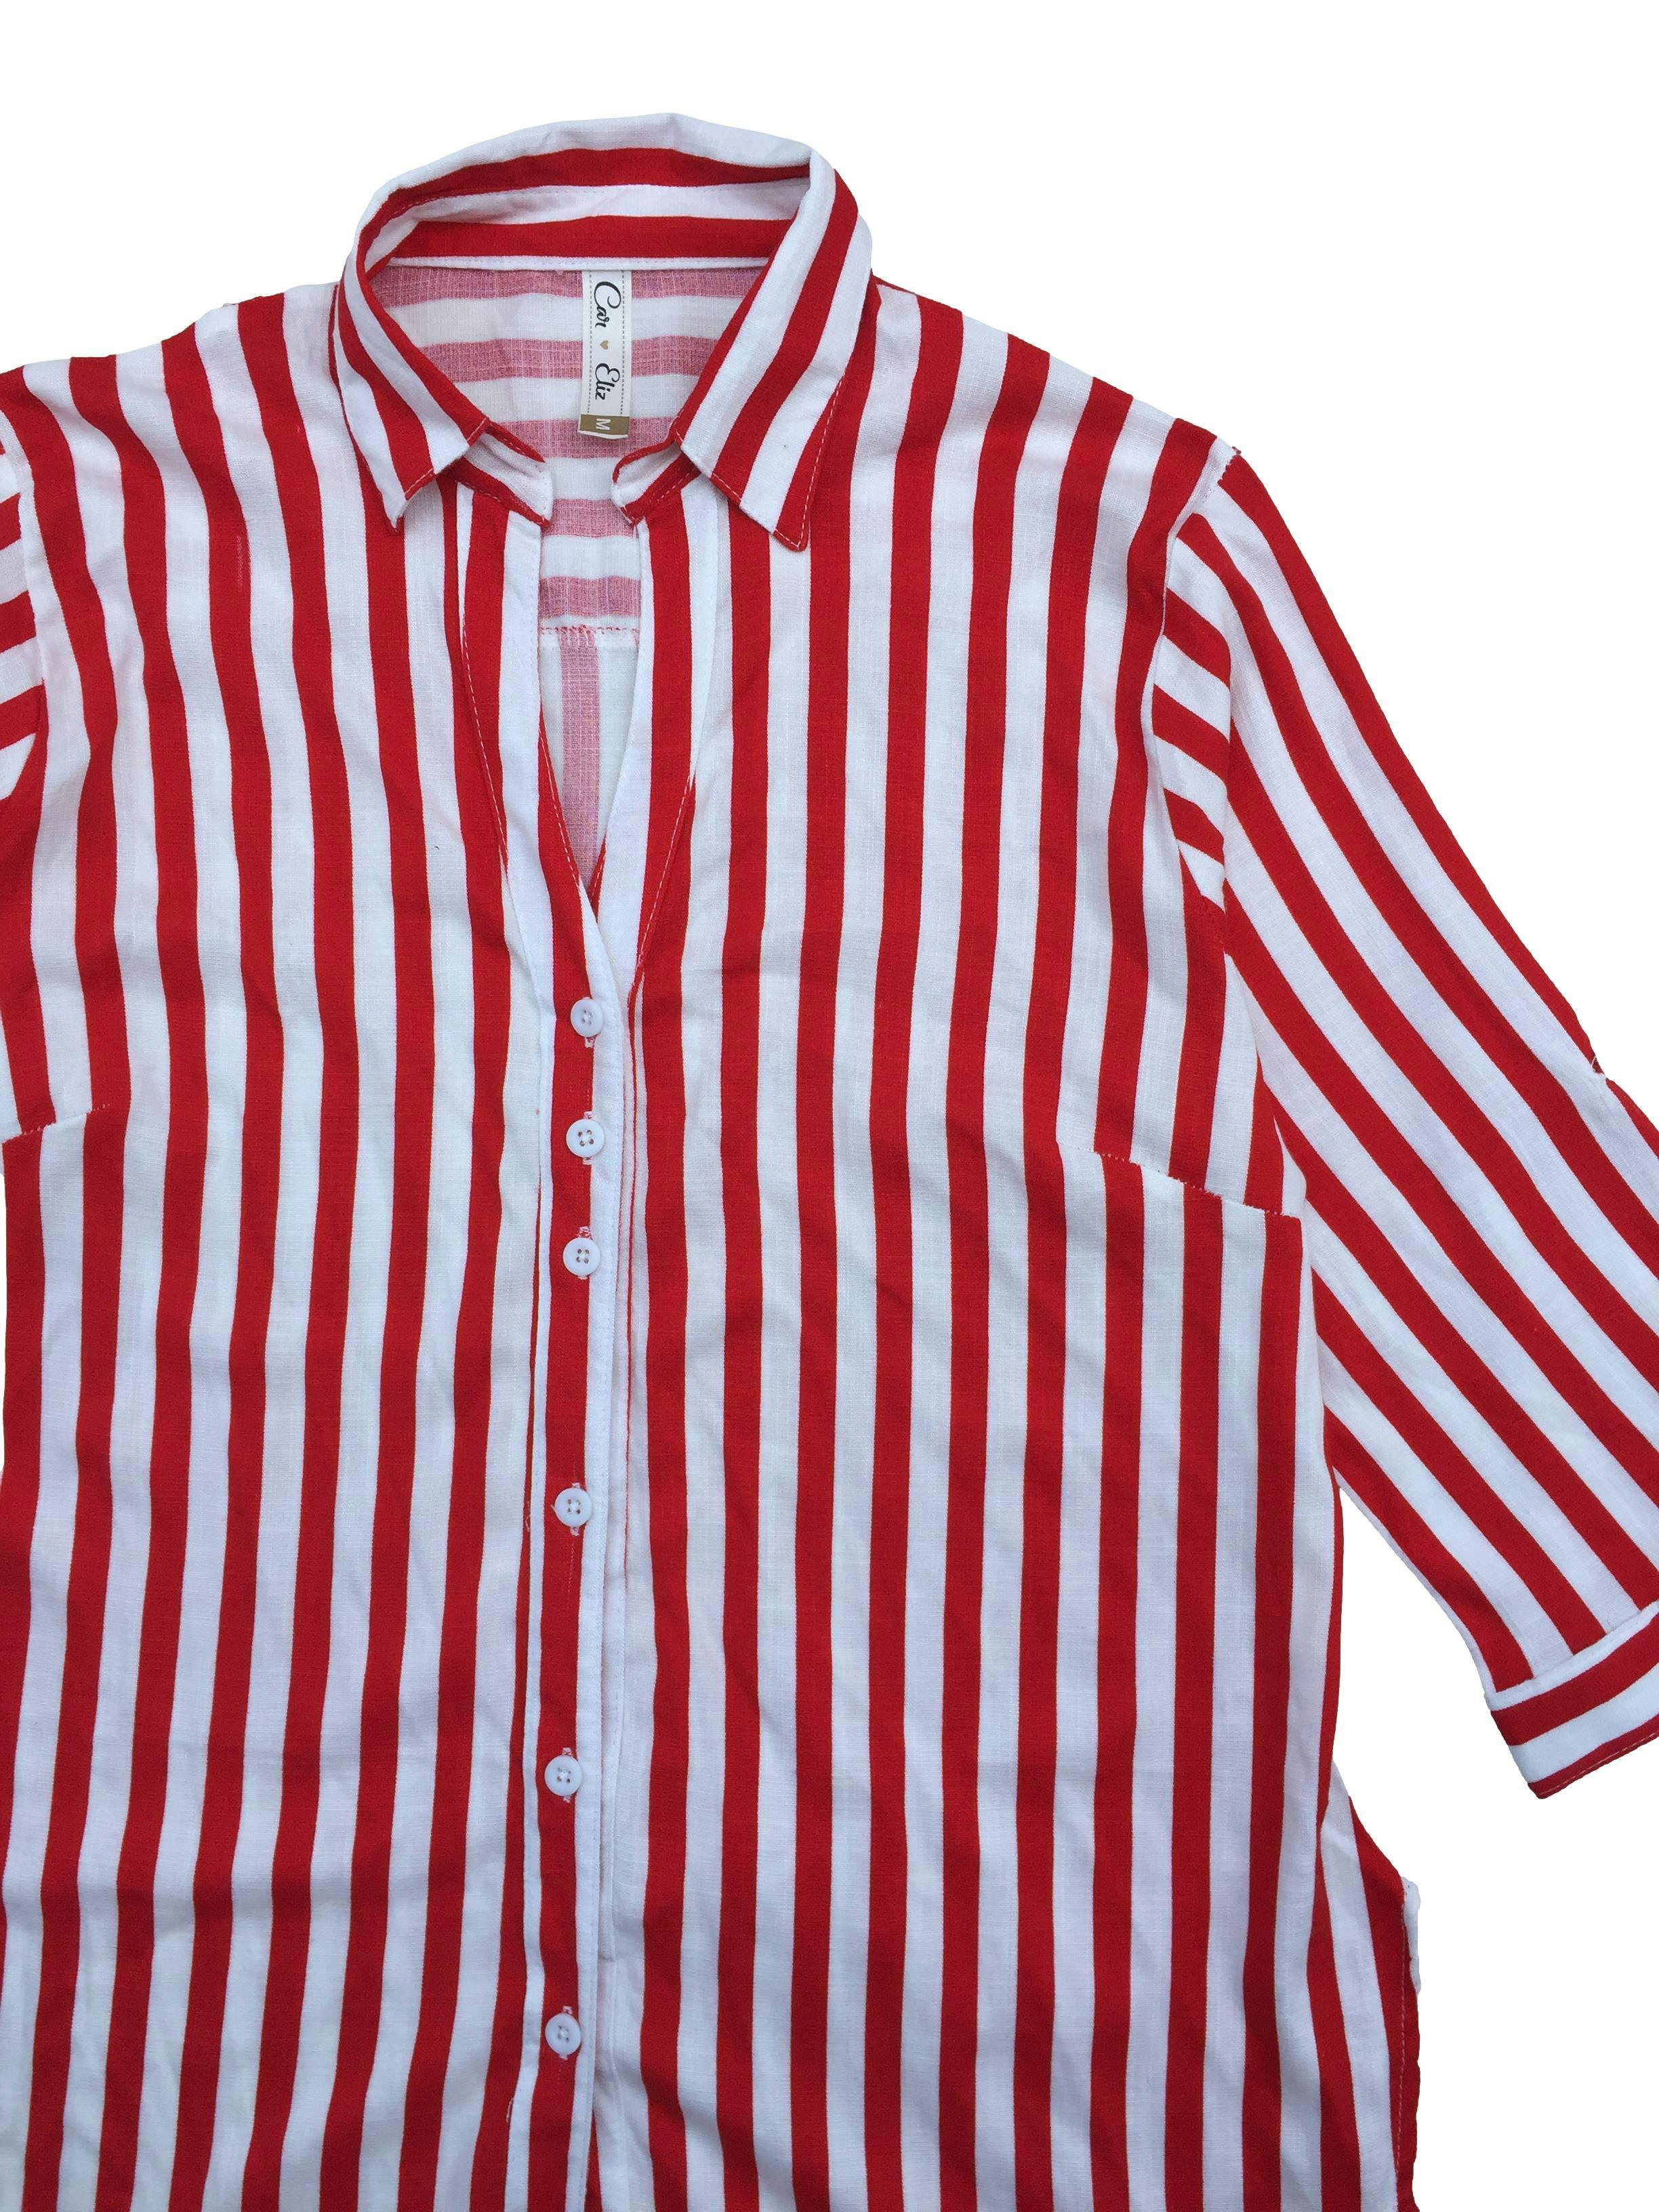 Blusa a rayas roja y blanco, botones delanteros, manga 3/4 regulables con botón, aberturas laterales, tela fresca. Busto 98cm Largo 80cm